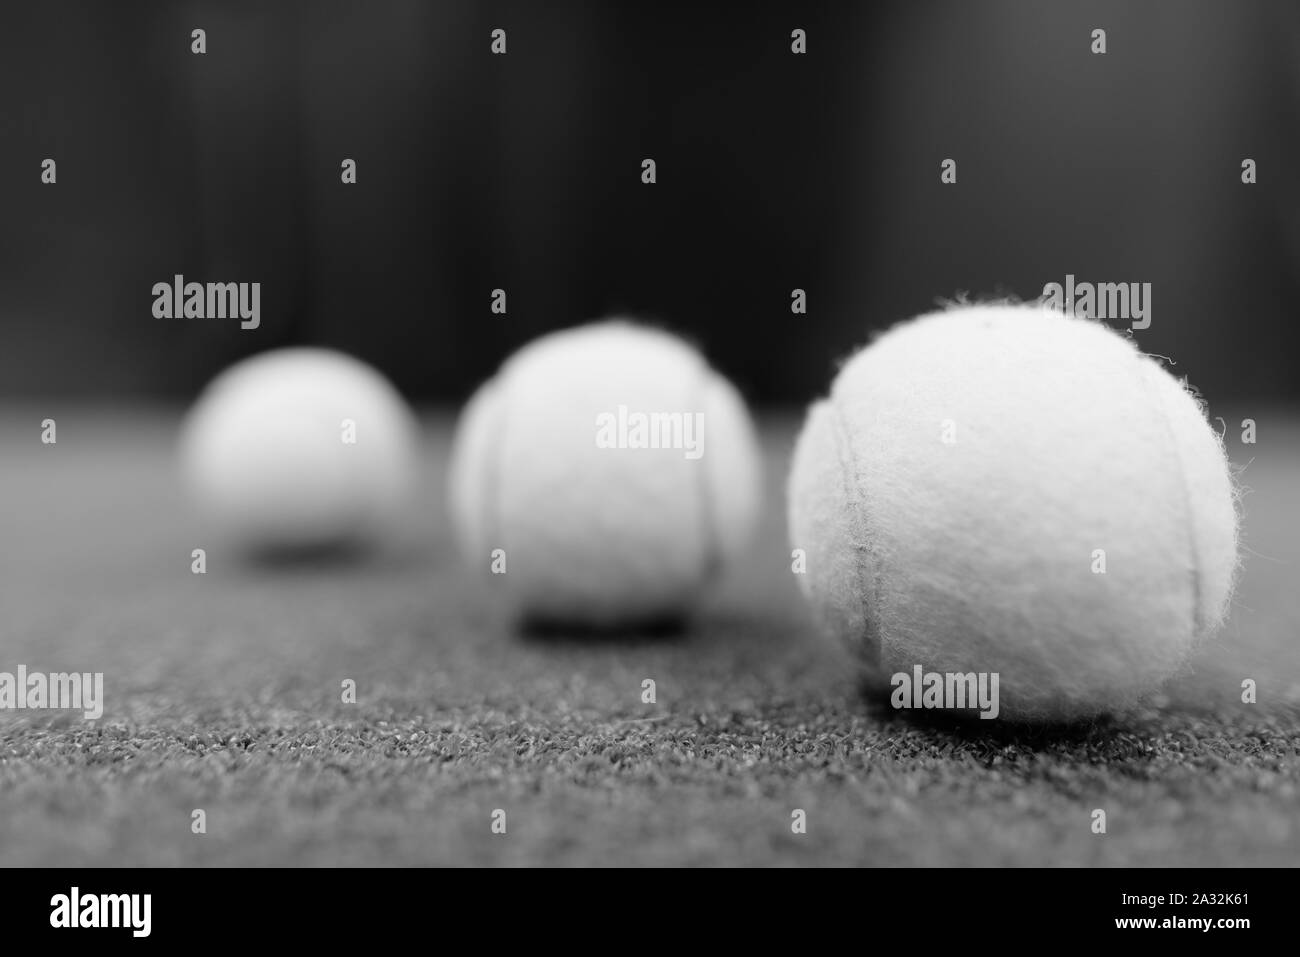 Tennis balls Black and White Stock Photos & Images - Alamy